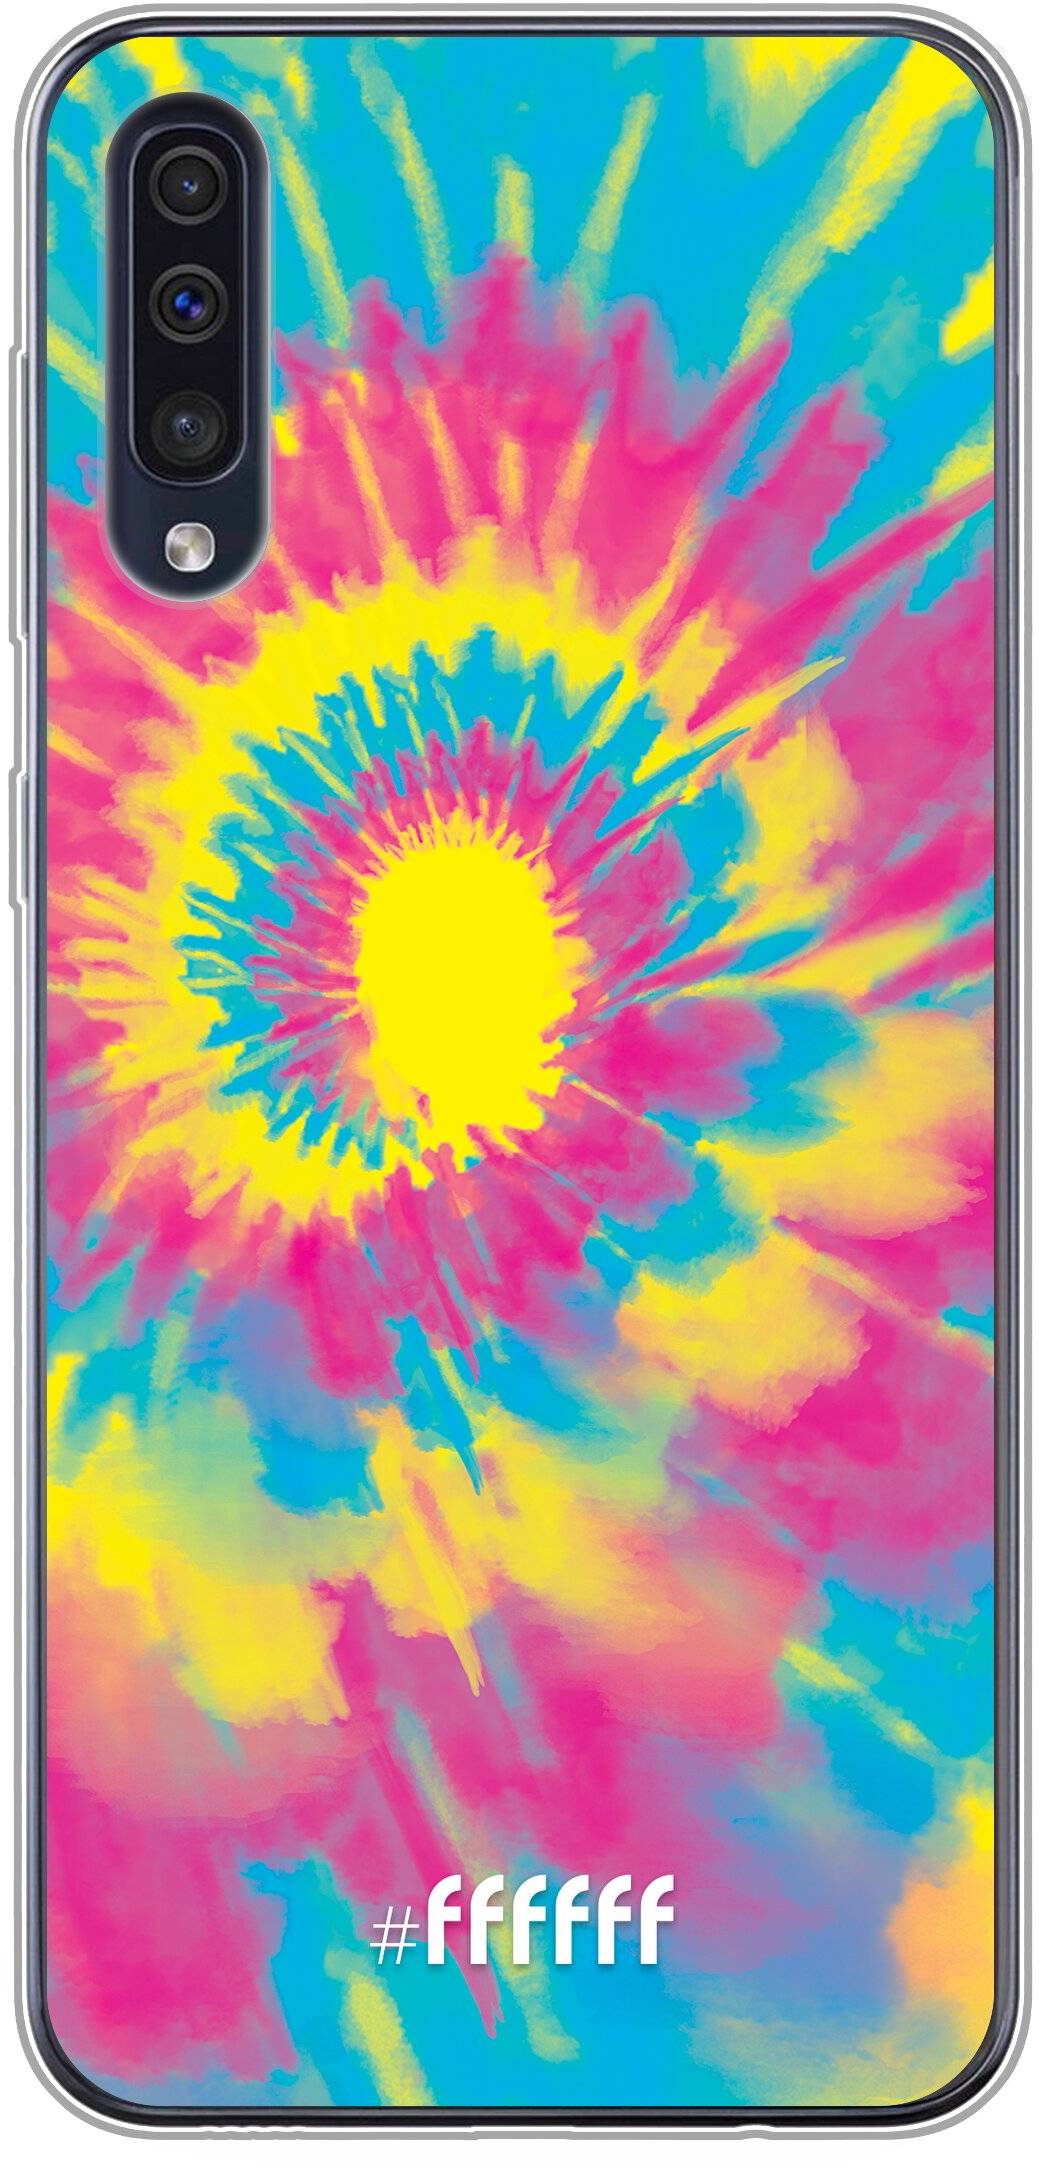 Psychedelic Tie Dye Galaxy A50s